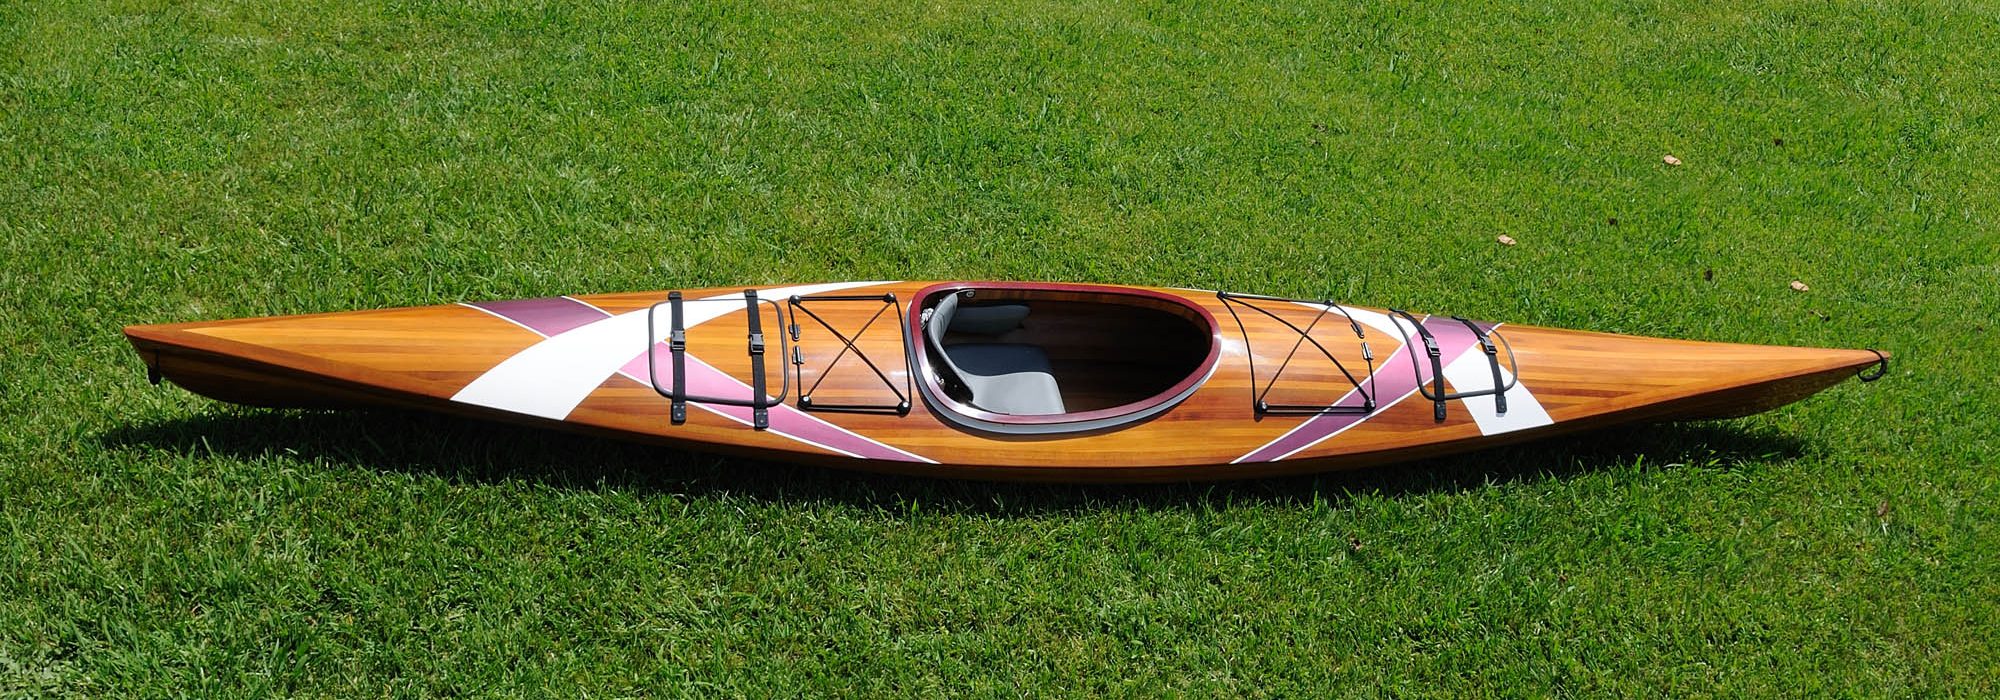 Salmon River wooden kayak resting in the grass Otis Oregon